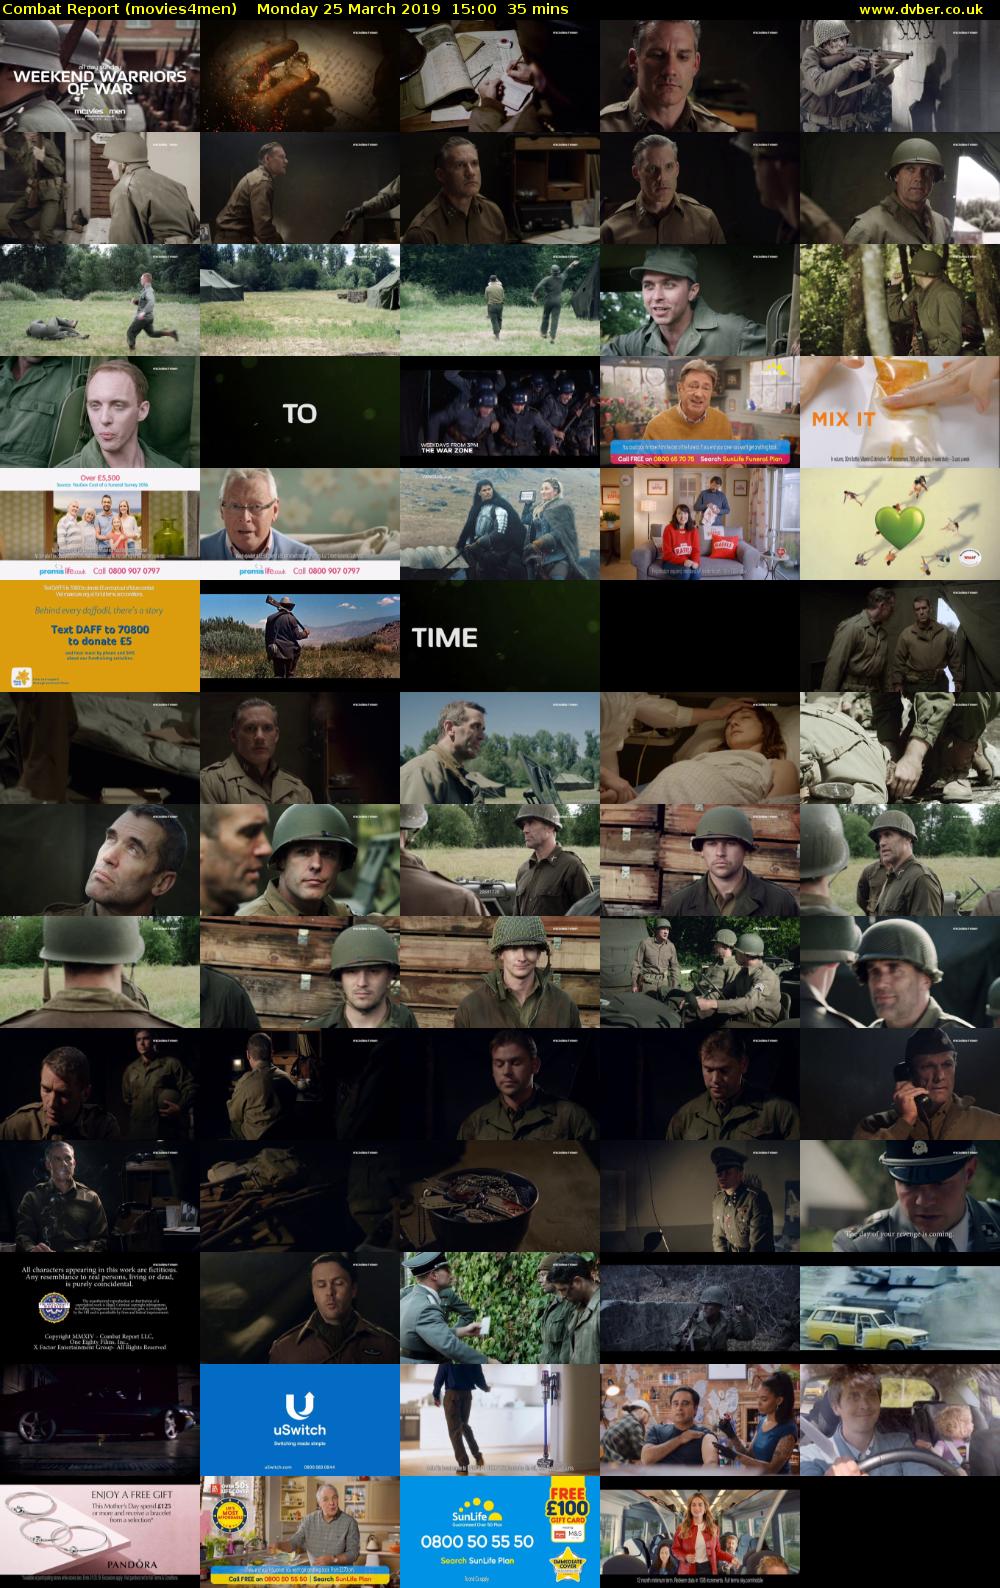 Combat Report (movies4men) Monday 25 March 2019 15:00 - 15:35